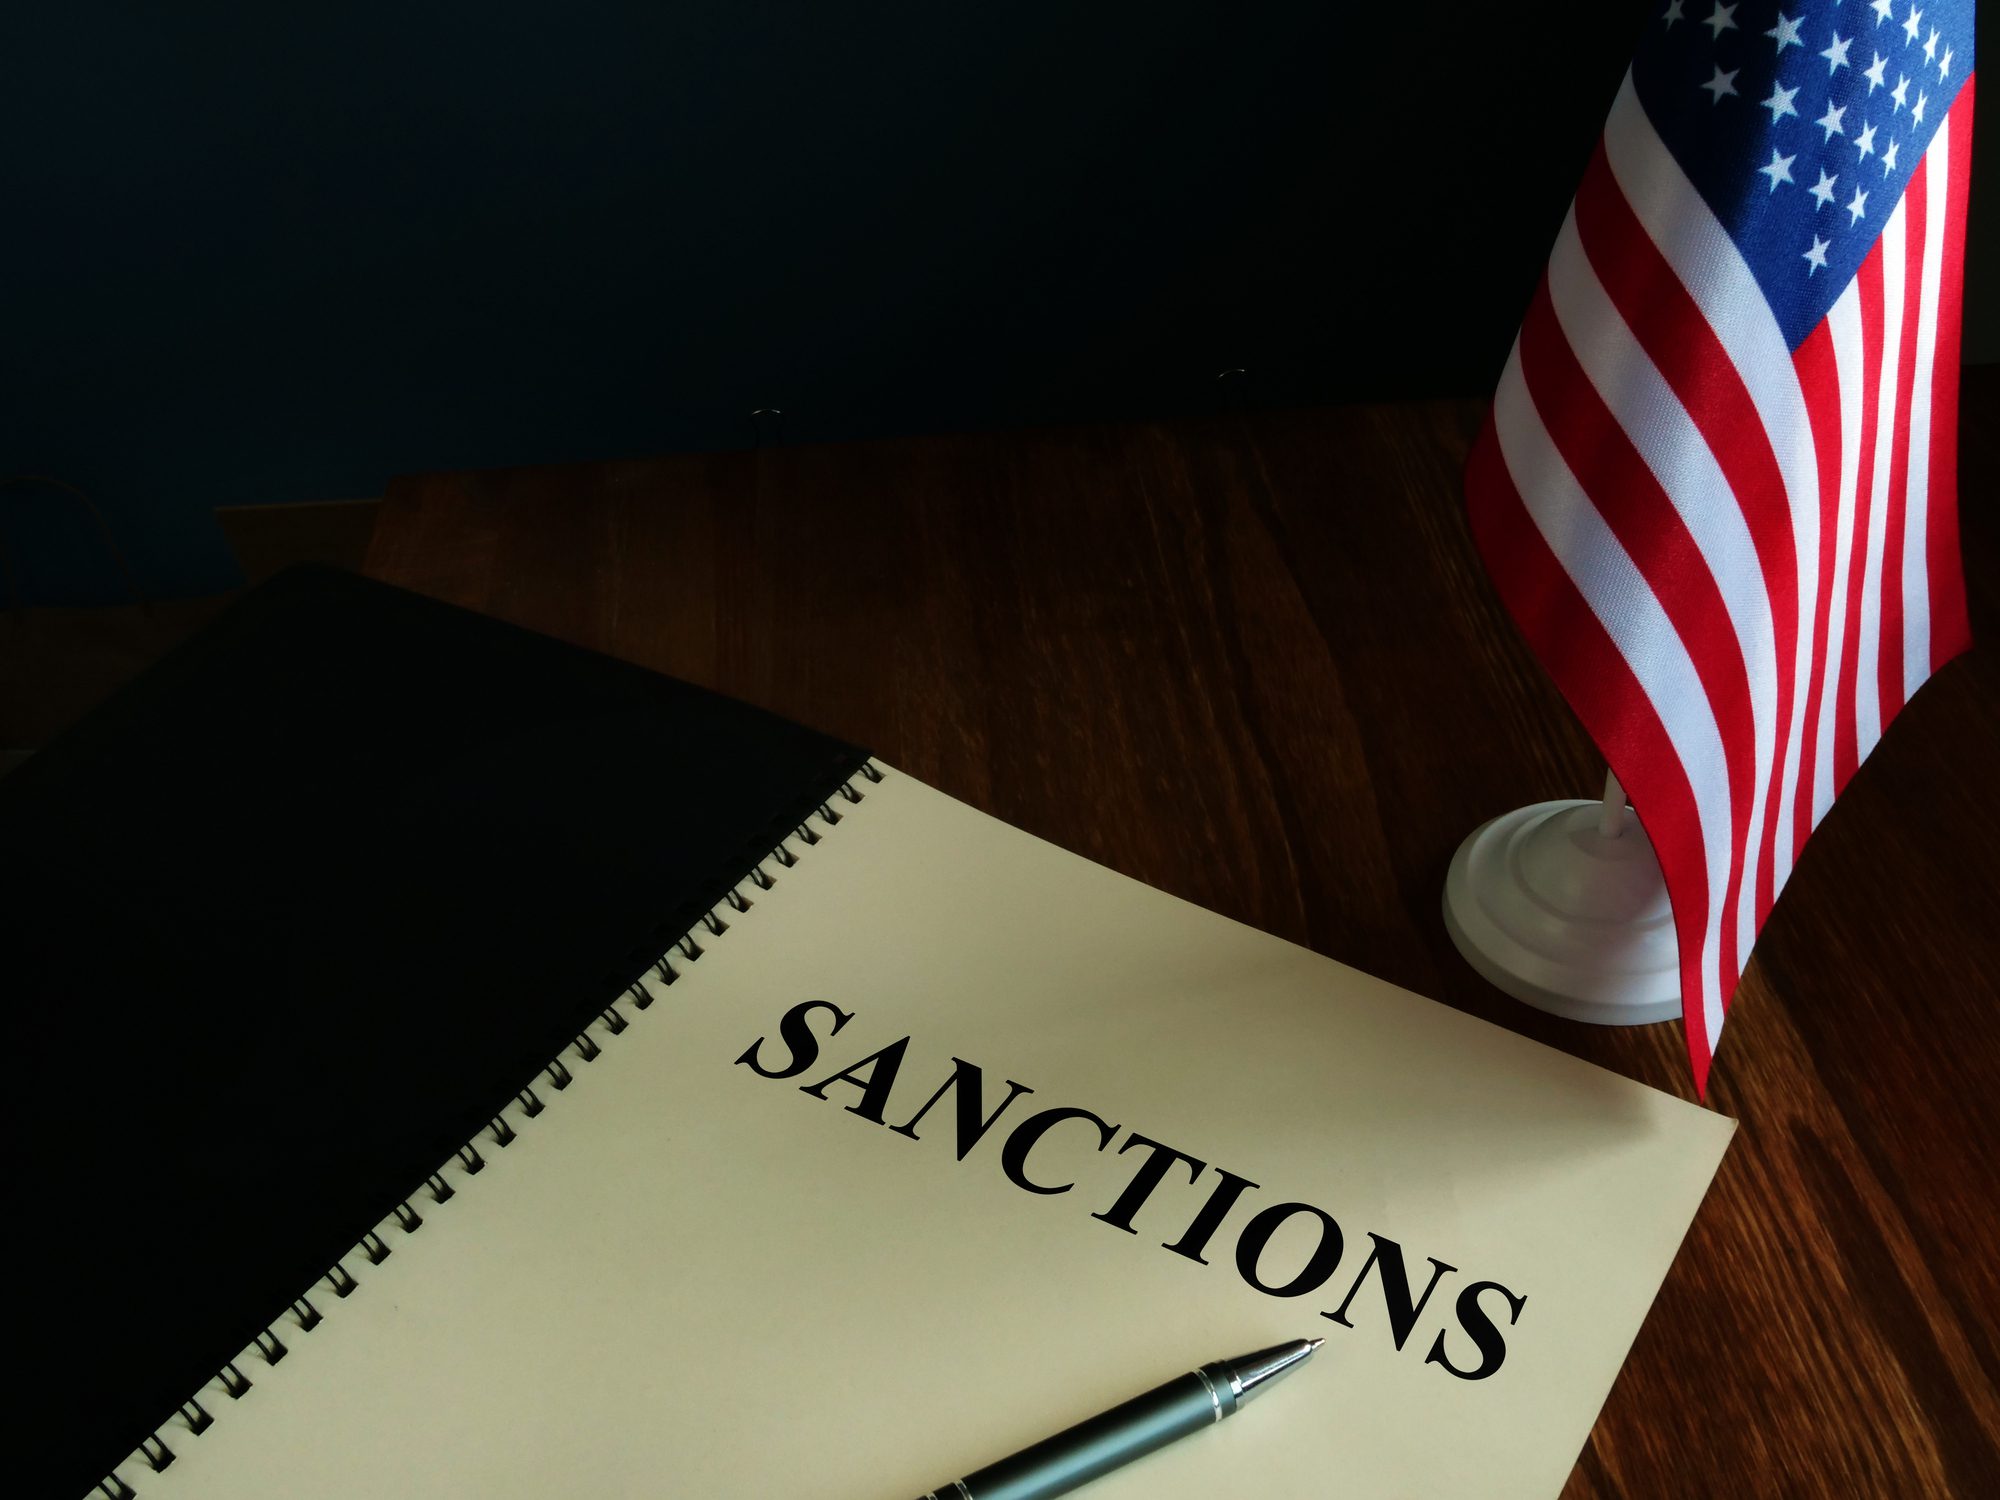 American sanctions and USA flag on table.